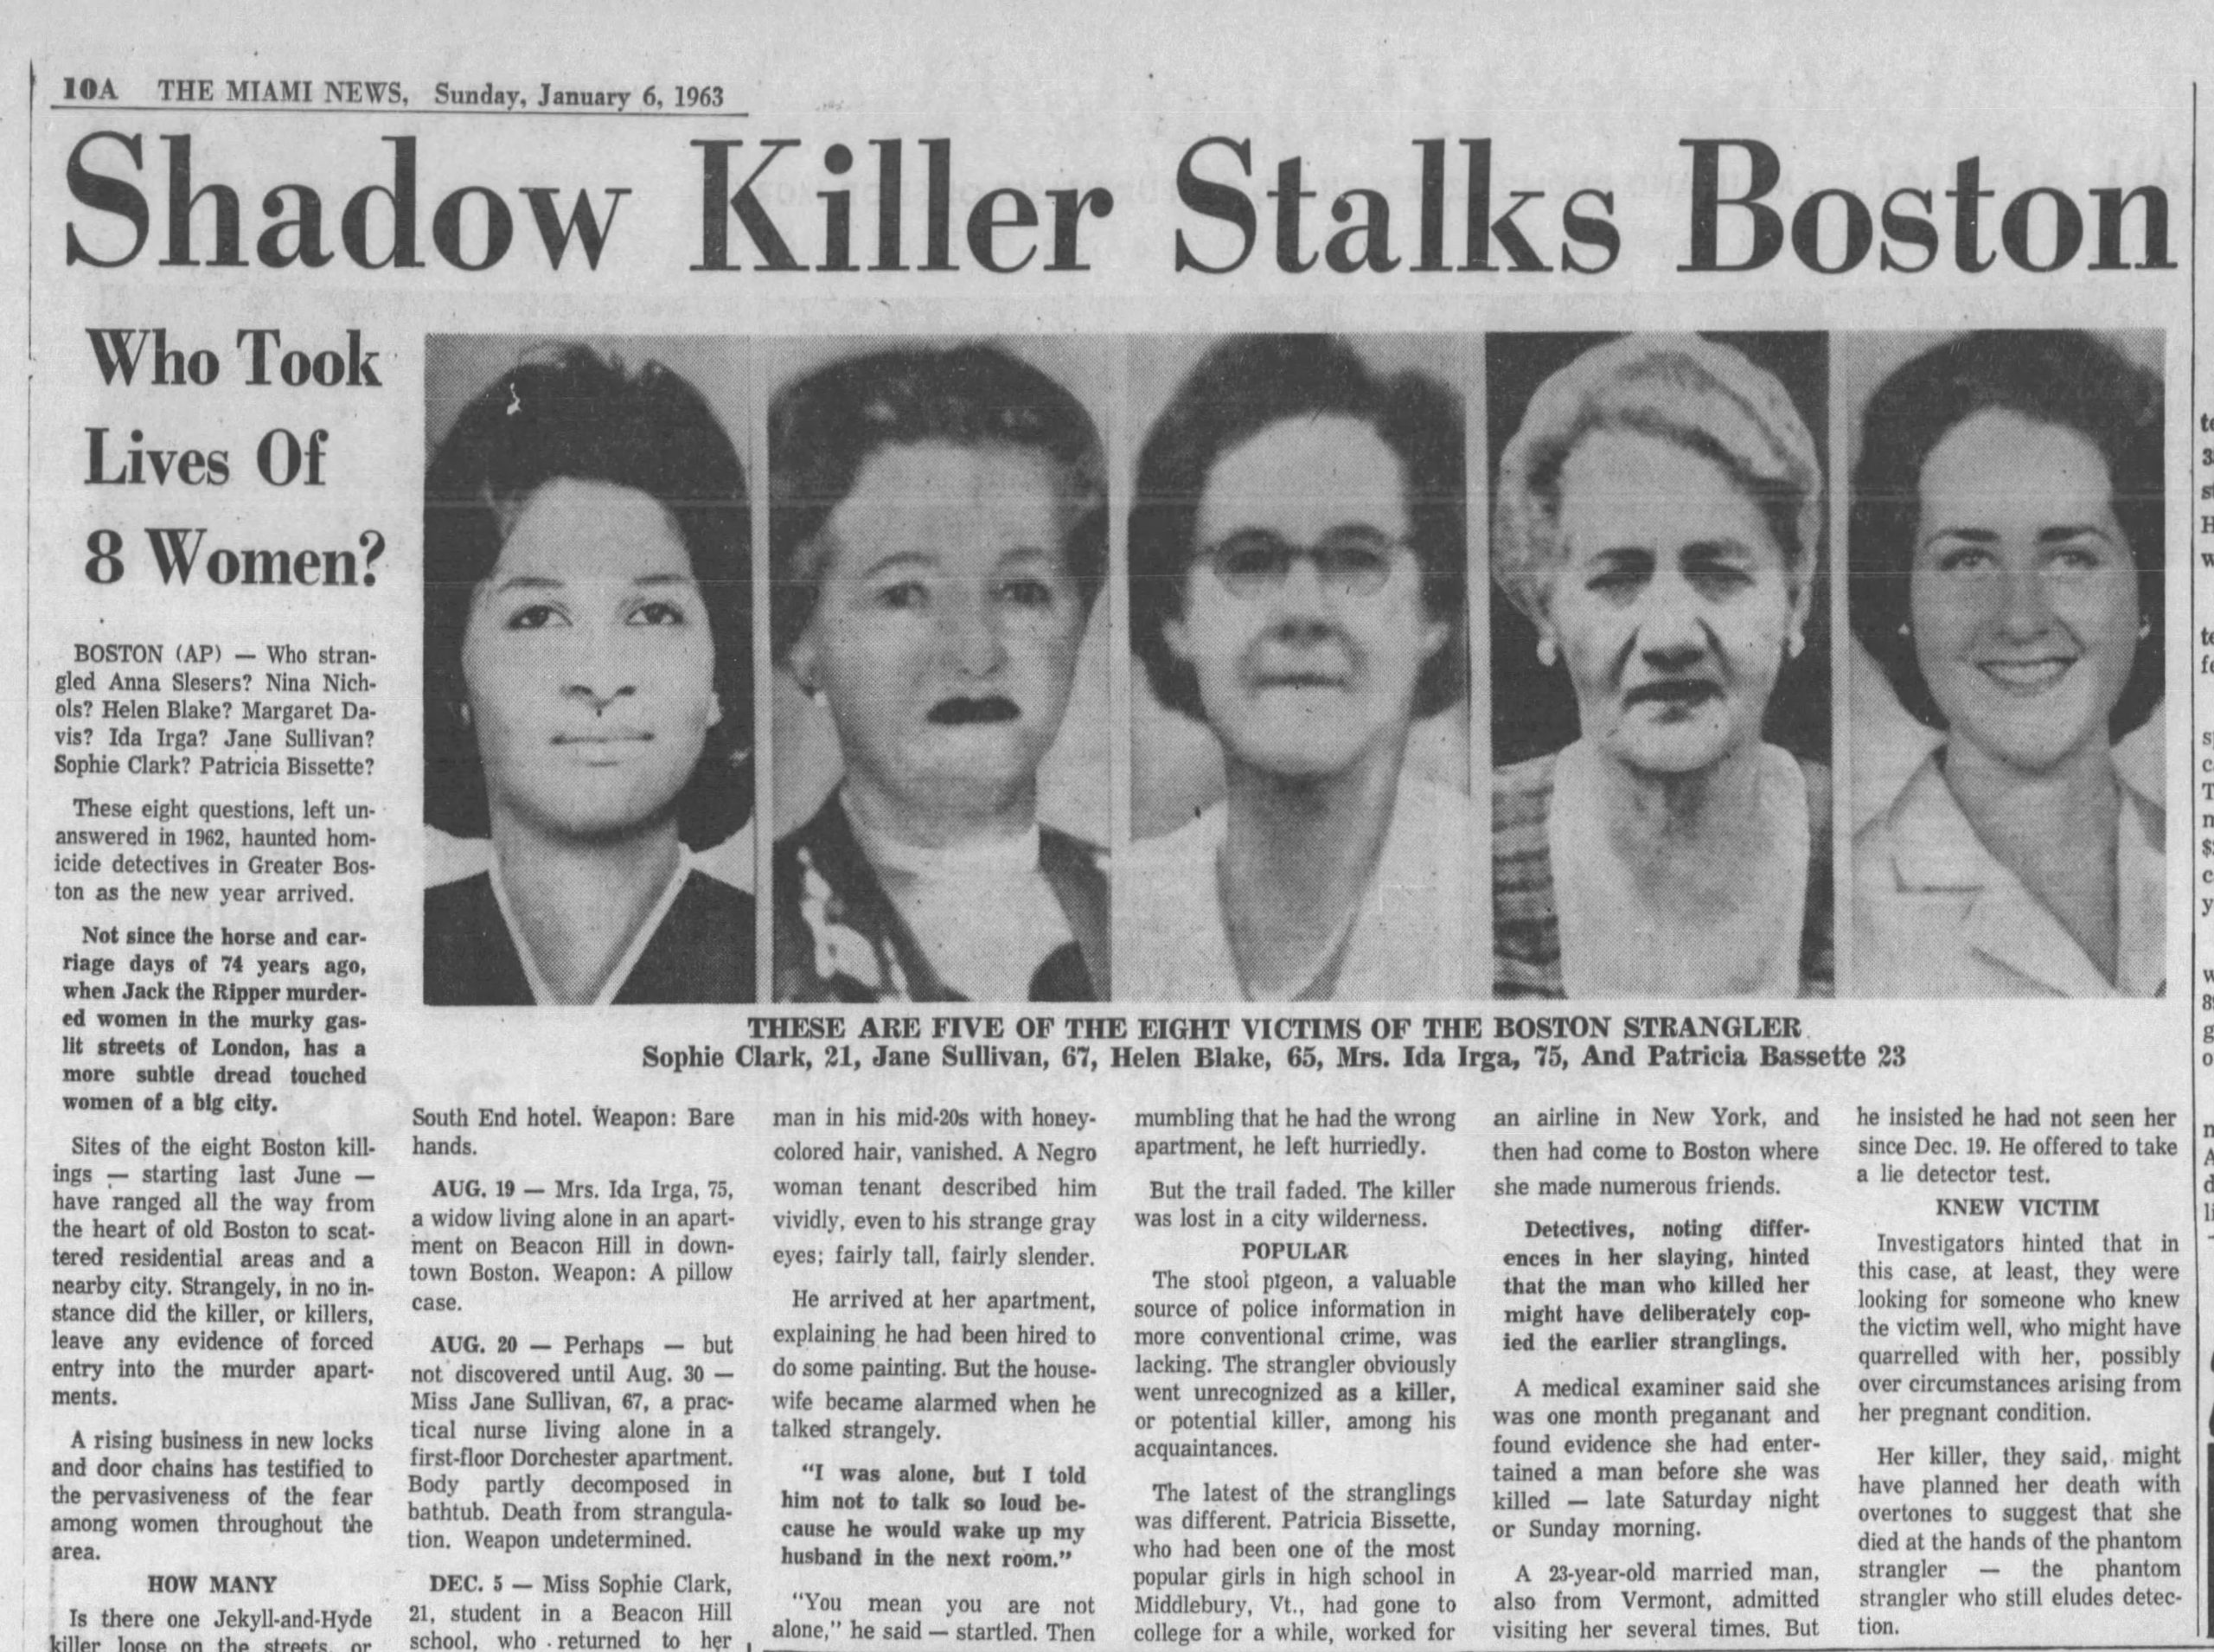 Boston Strangler headline, 1963 (Miami News, via Newspapers.com)